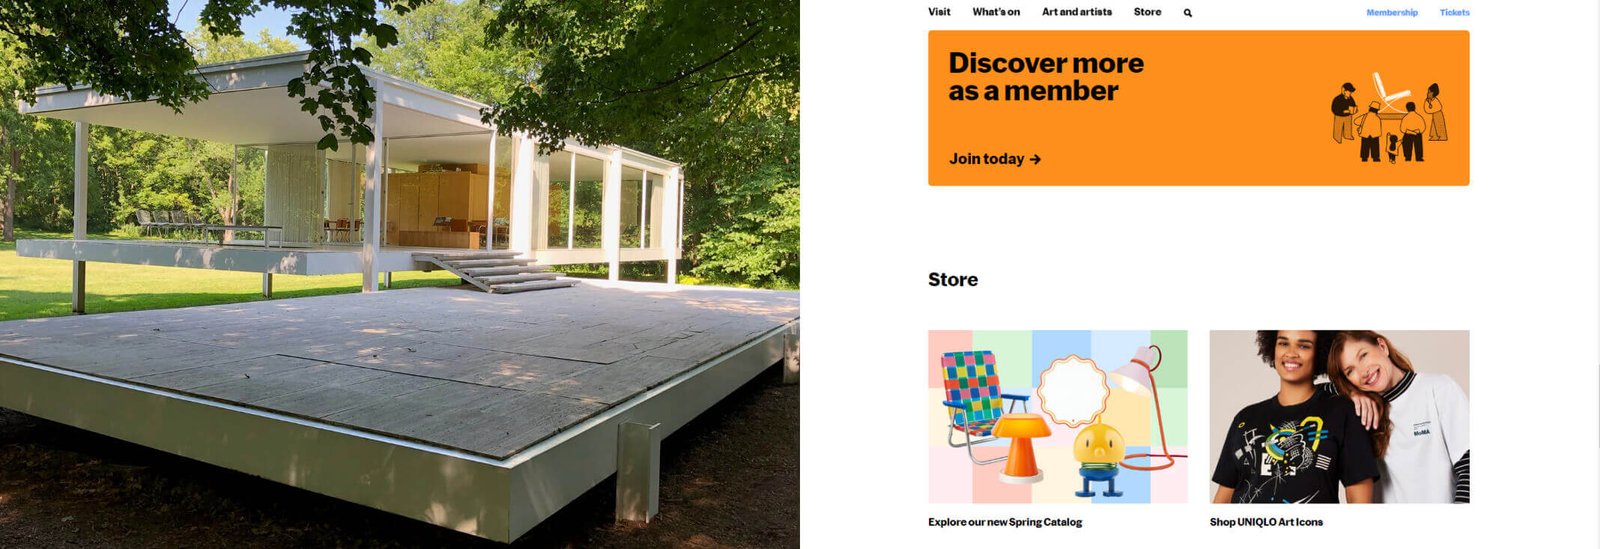 Photo Farnsworth House et Site web du MOMA